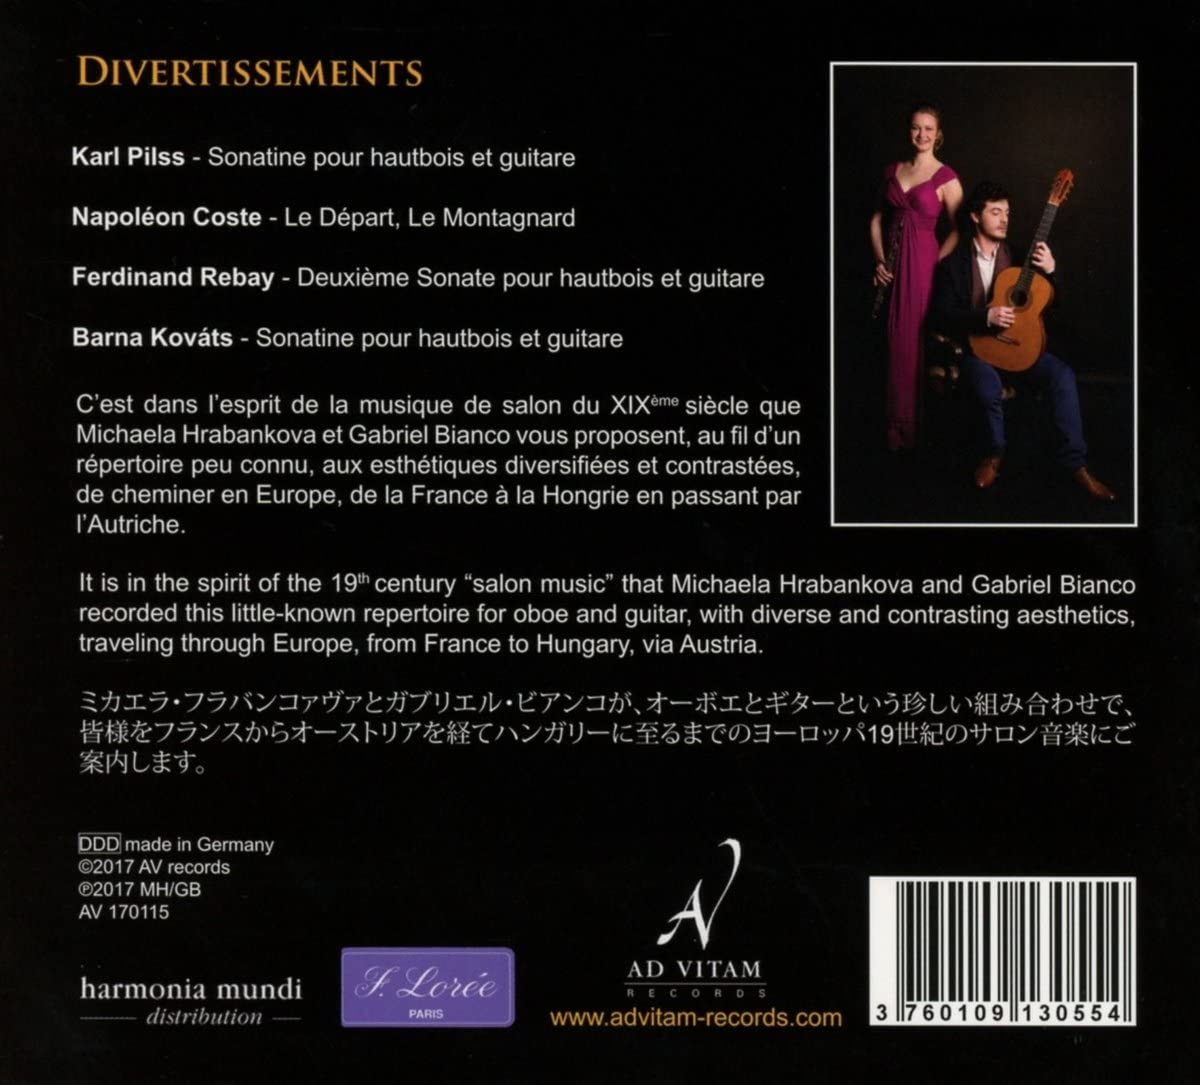 Divertissements - utwory na obój i gitarę - slide-1